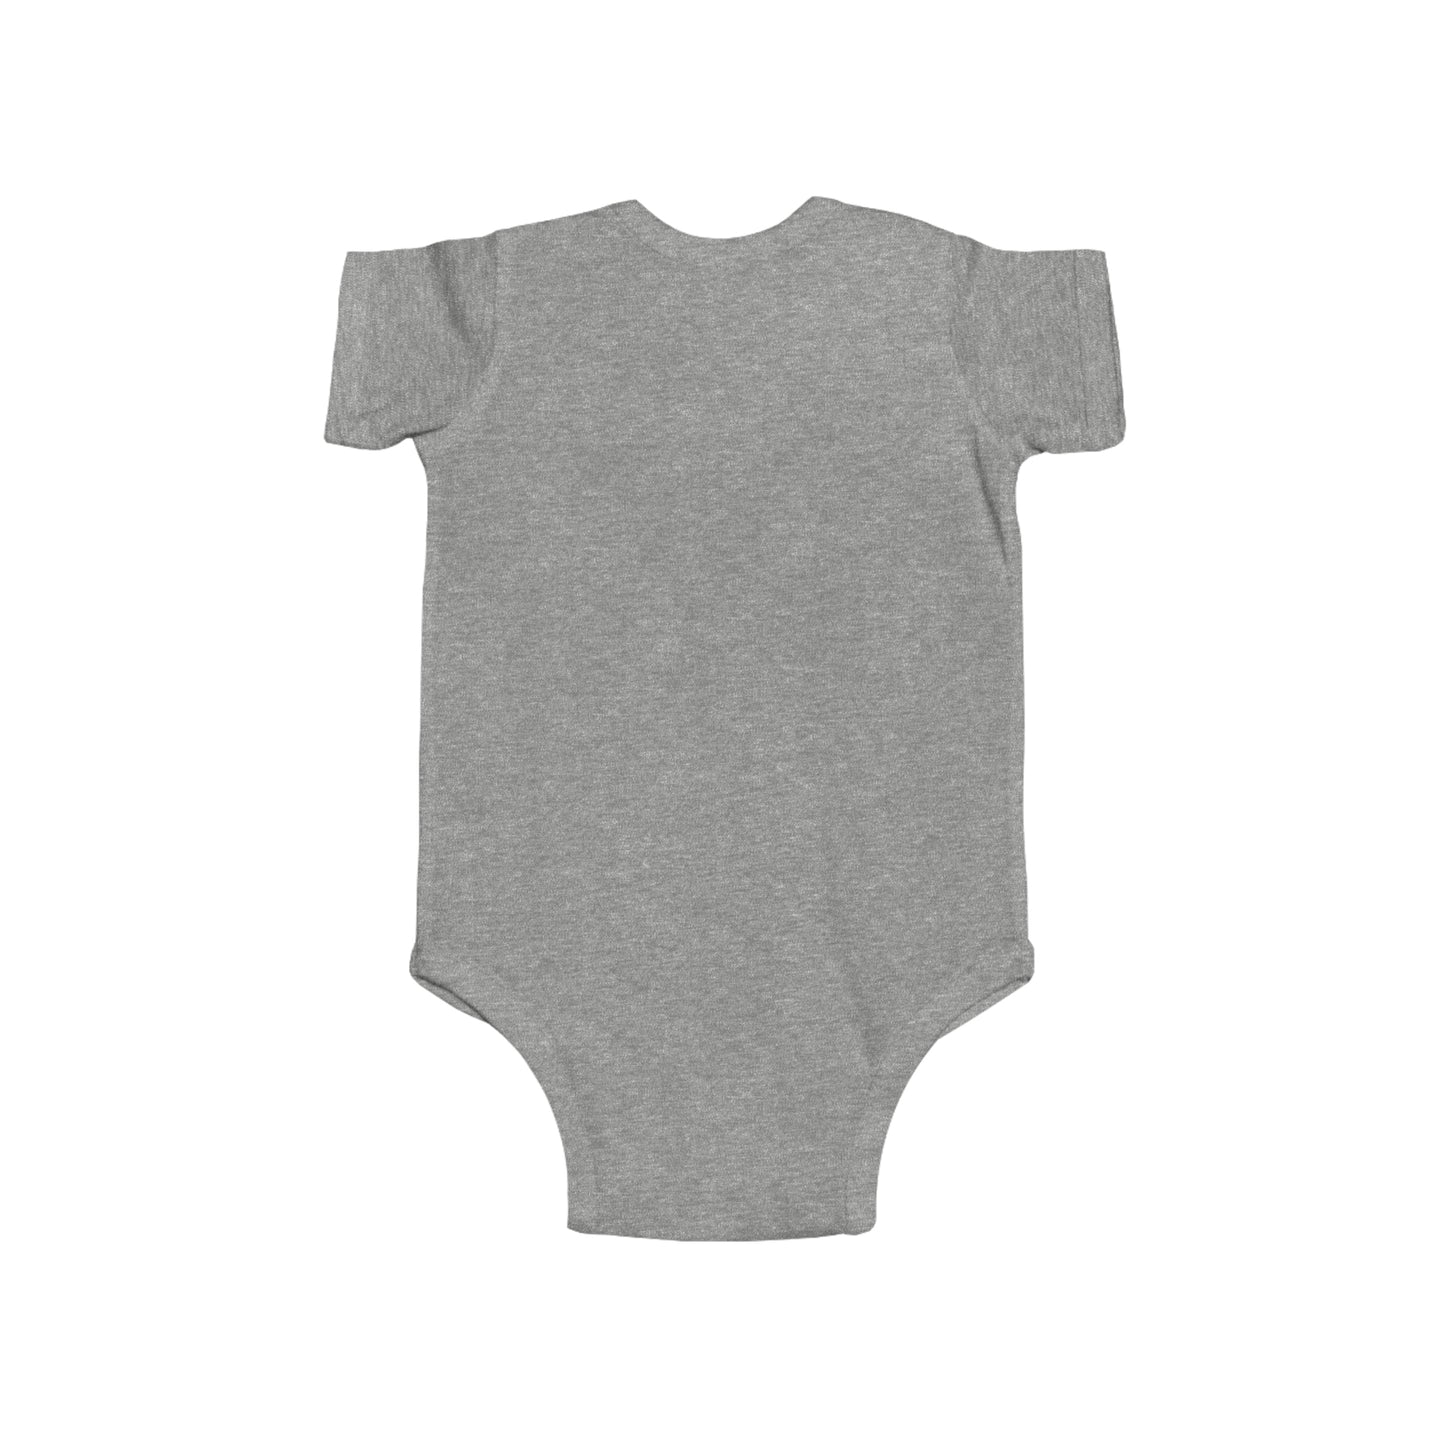 Swiftie in Training Infant Fine Jersey Bodysuit - Perfect Gift for the Ultimate Swiftie Fan's New Baby